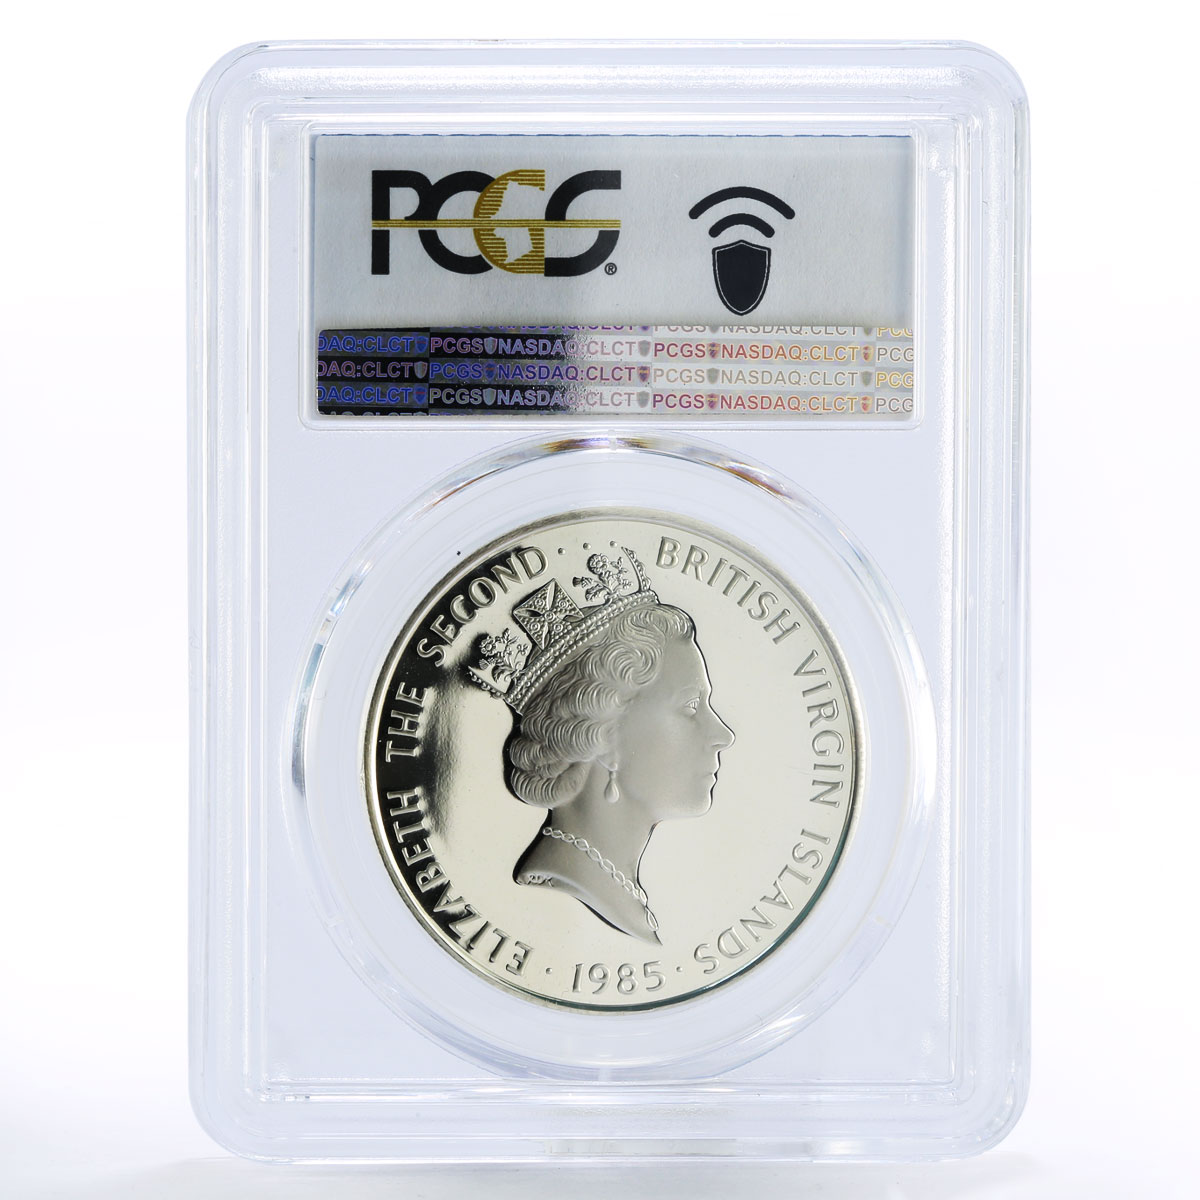 British Virgin Islands 20 dollars Sword Guillon PR70 PCGS silver coin 1985